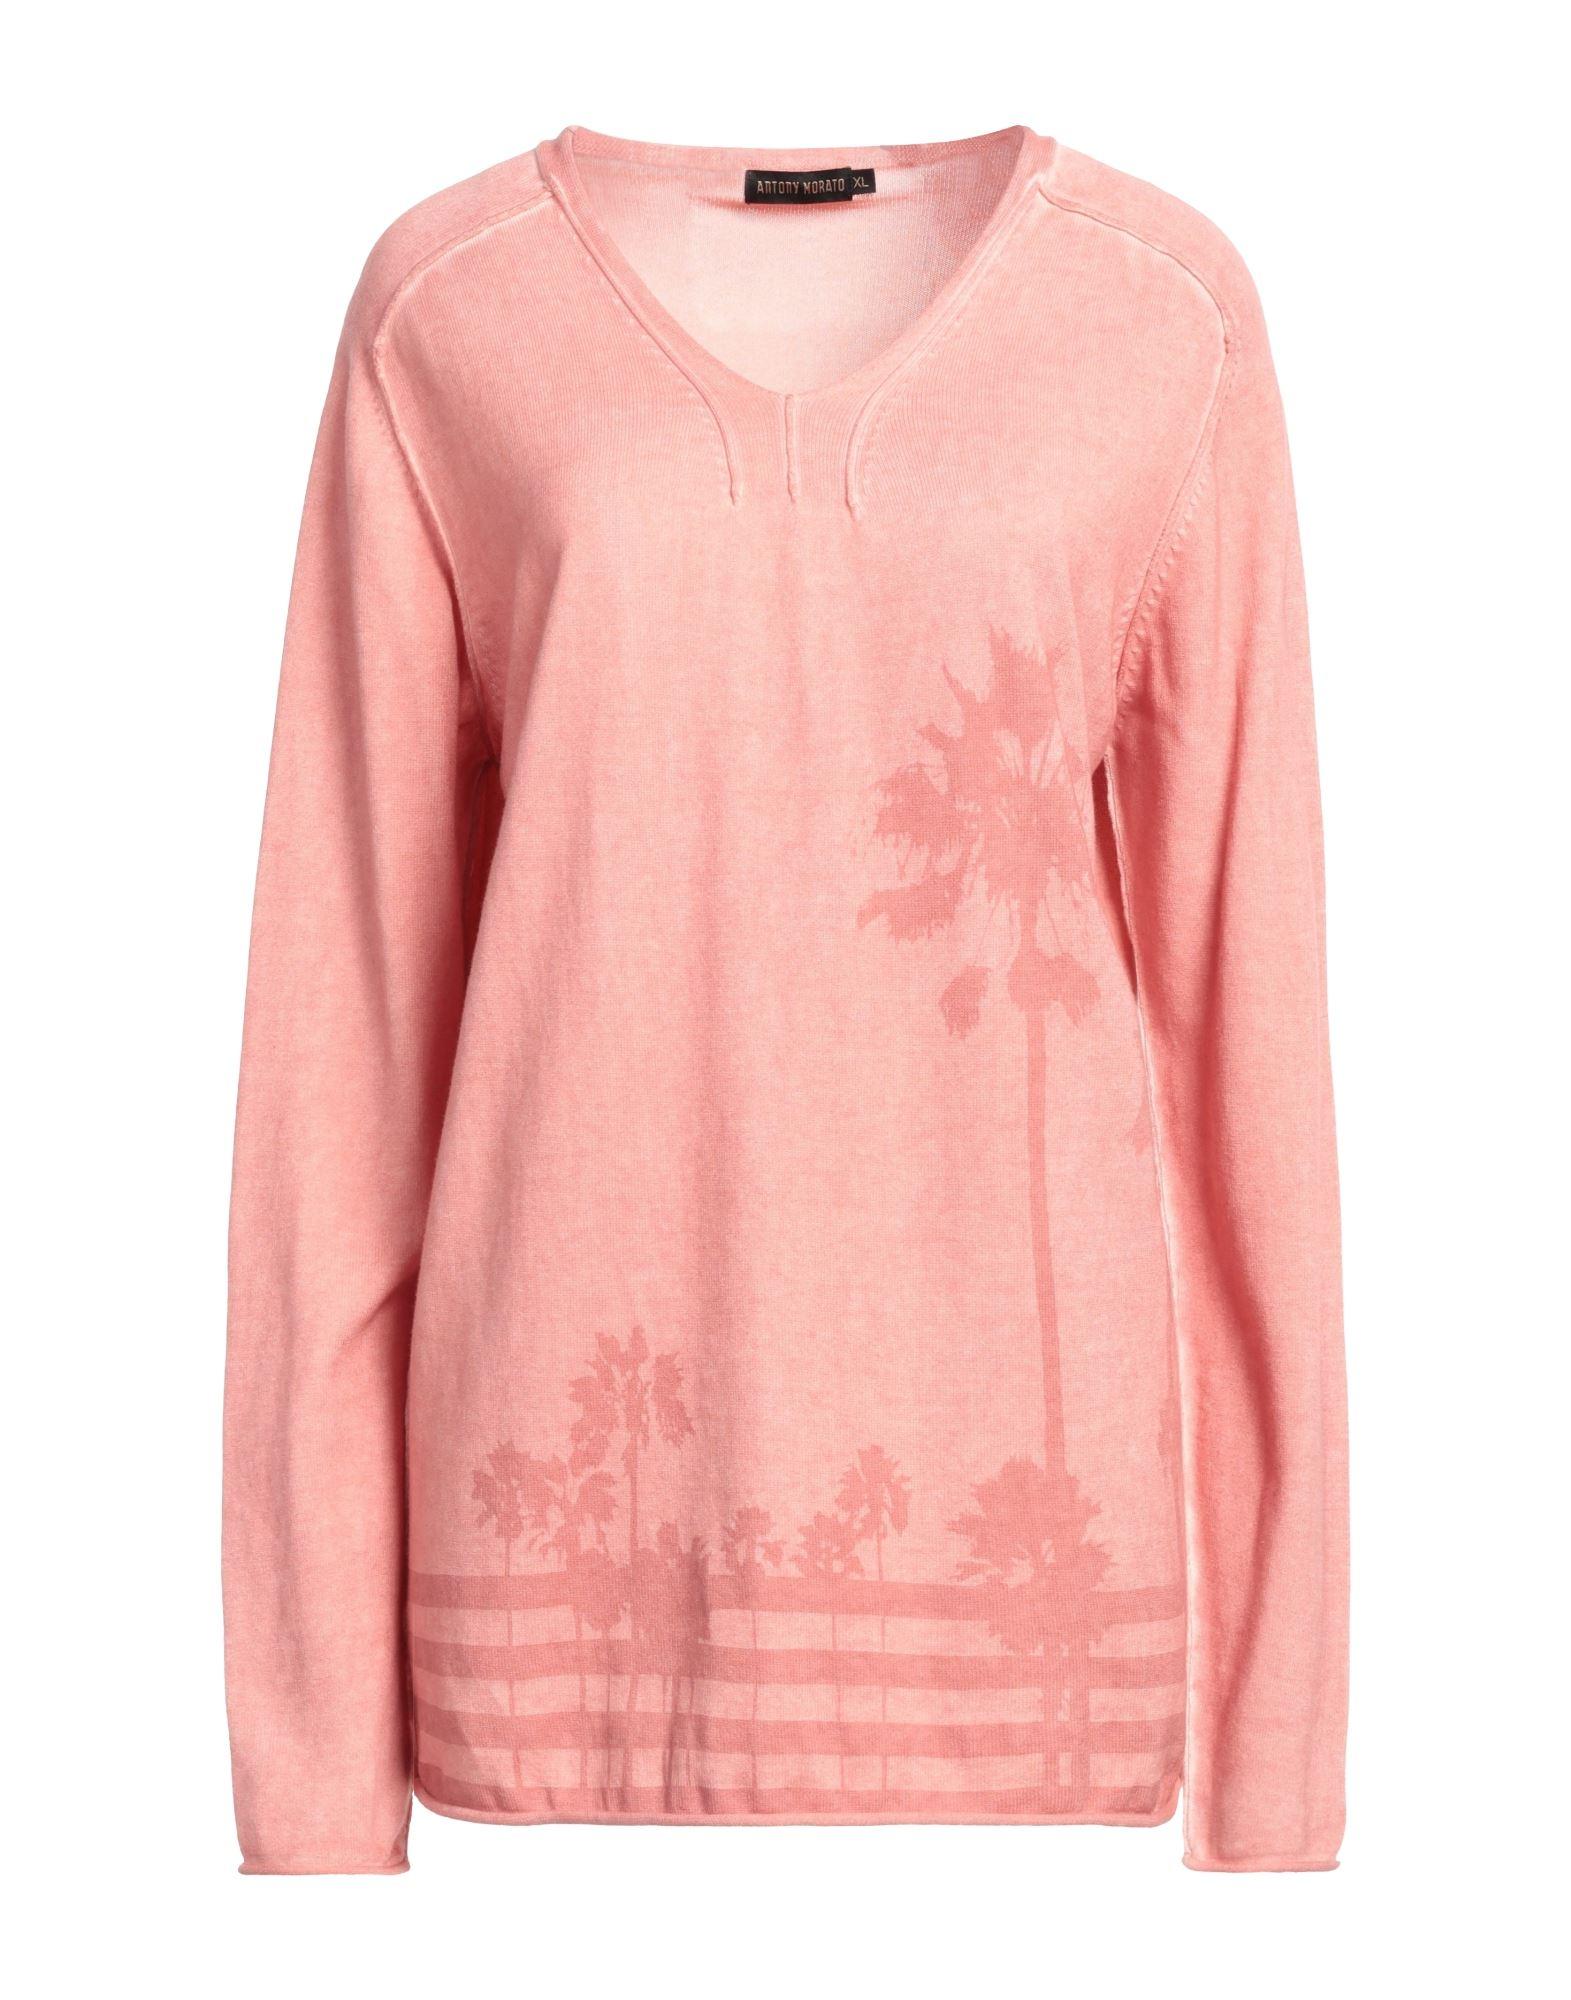 Moderniseren Zinloos passage Antony Morato Sweater in Pink | Lyst